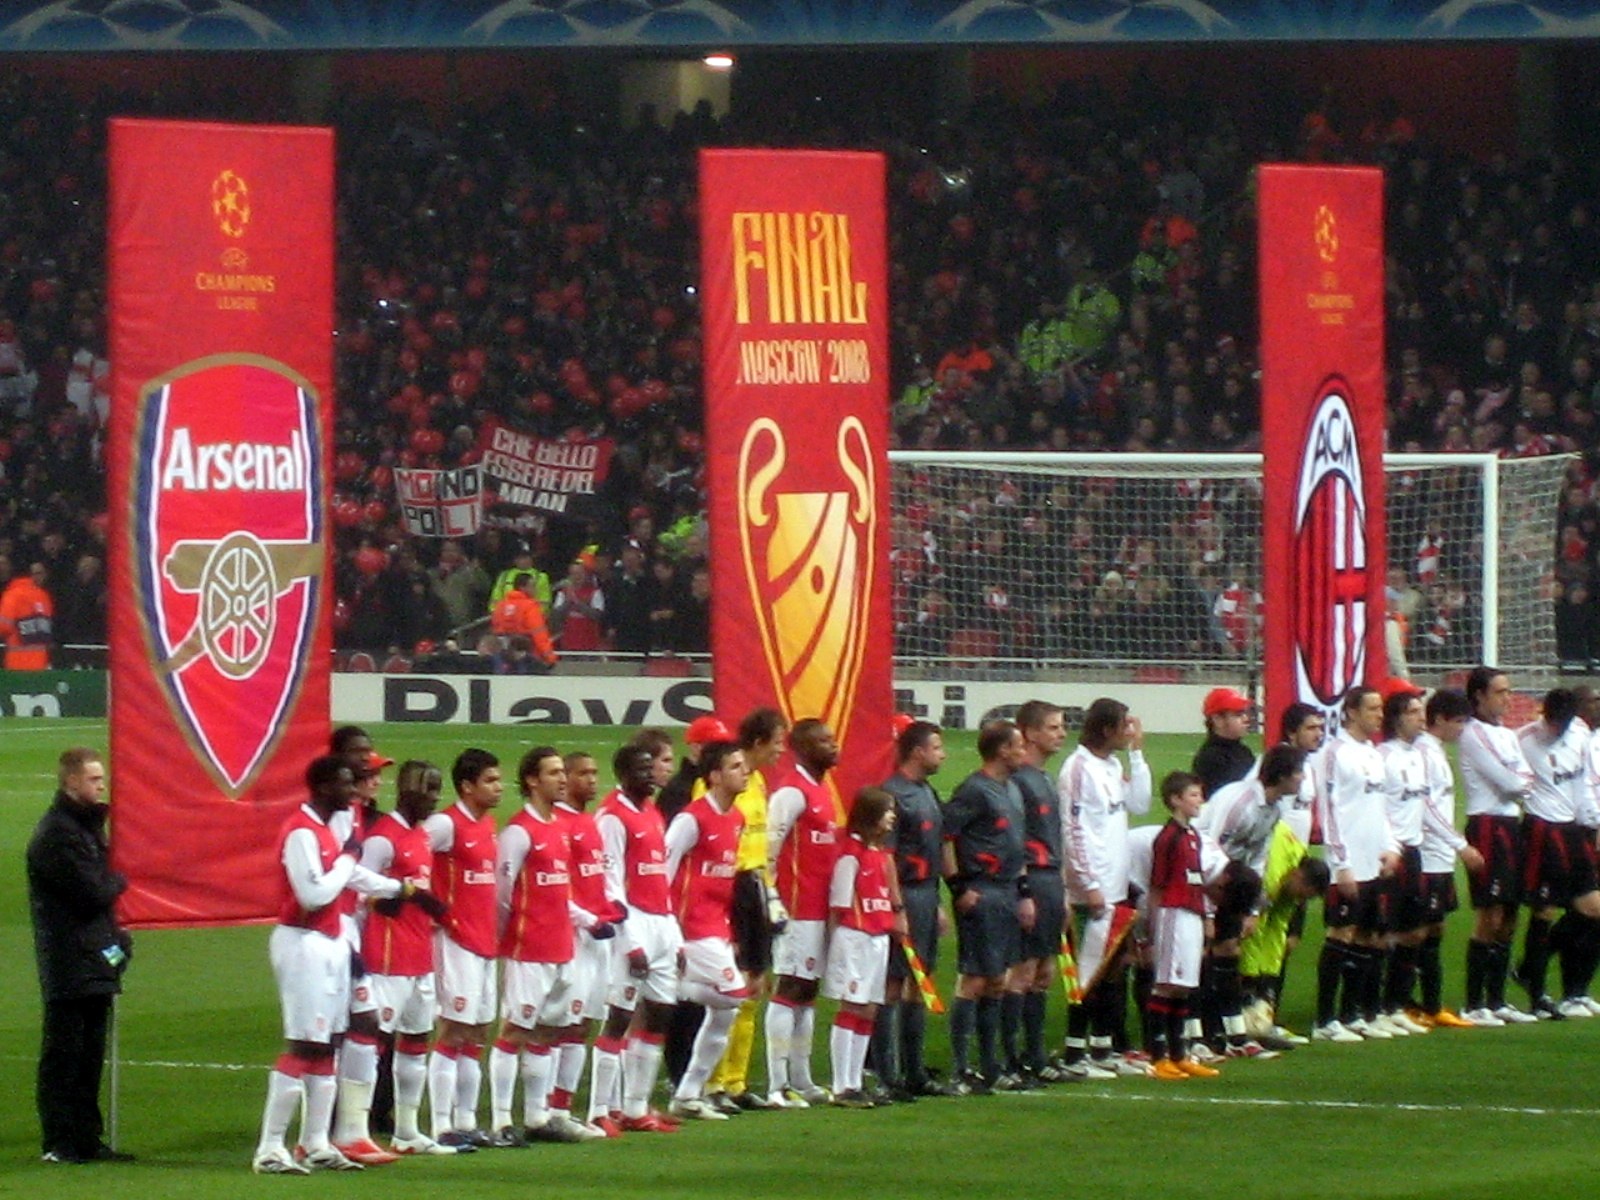 Arsenal_Milan_CL07-08_Lineup